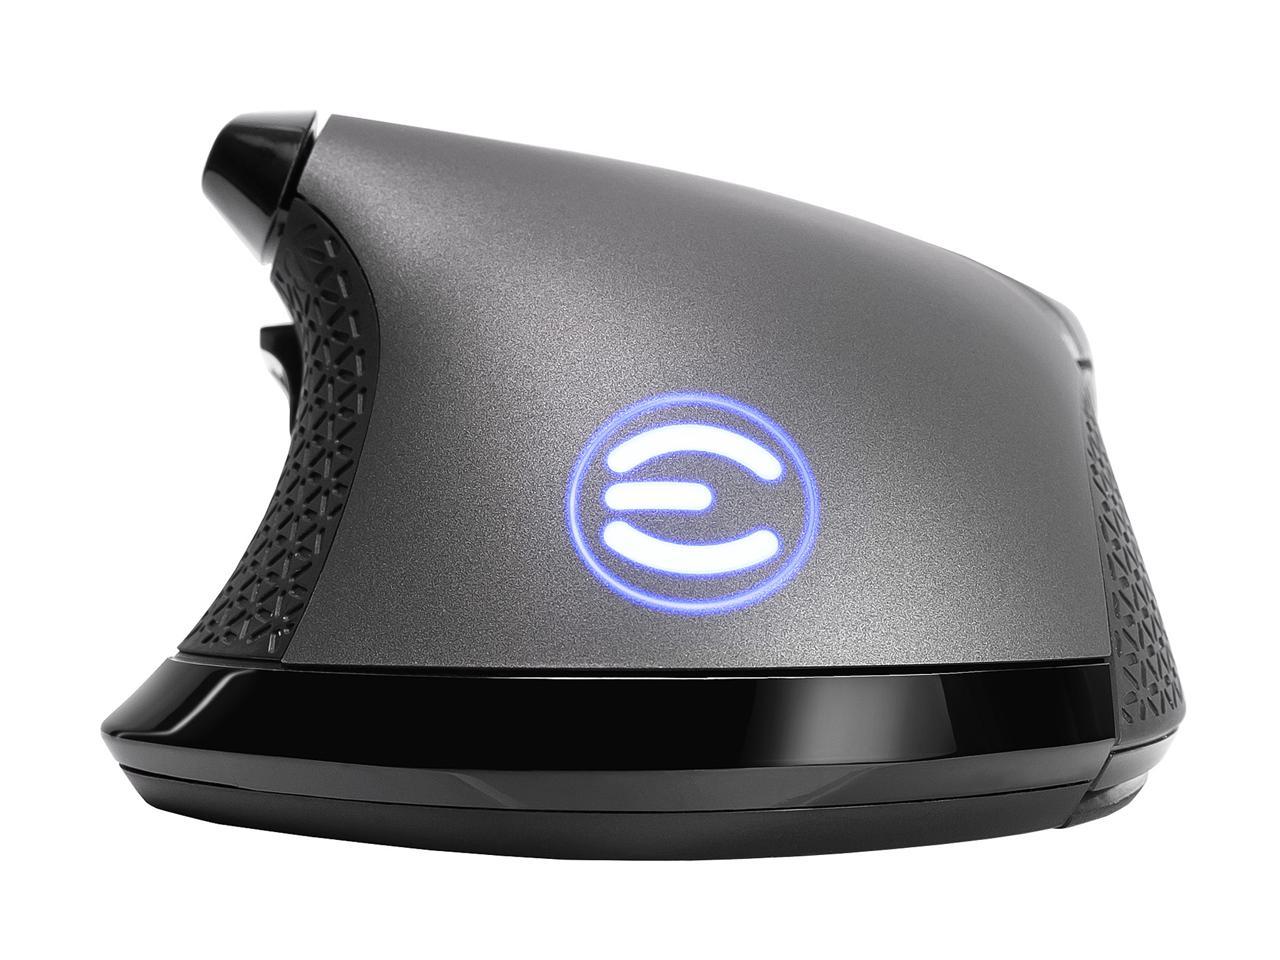 EVGA X20 Gaming Mouse, Wireless, Grey, Customizable, 16,000 DPI, 5 Profiles, 10 Buttons, Ergonomic 903-T1-20GR-KR